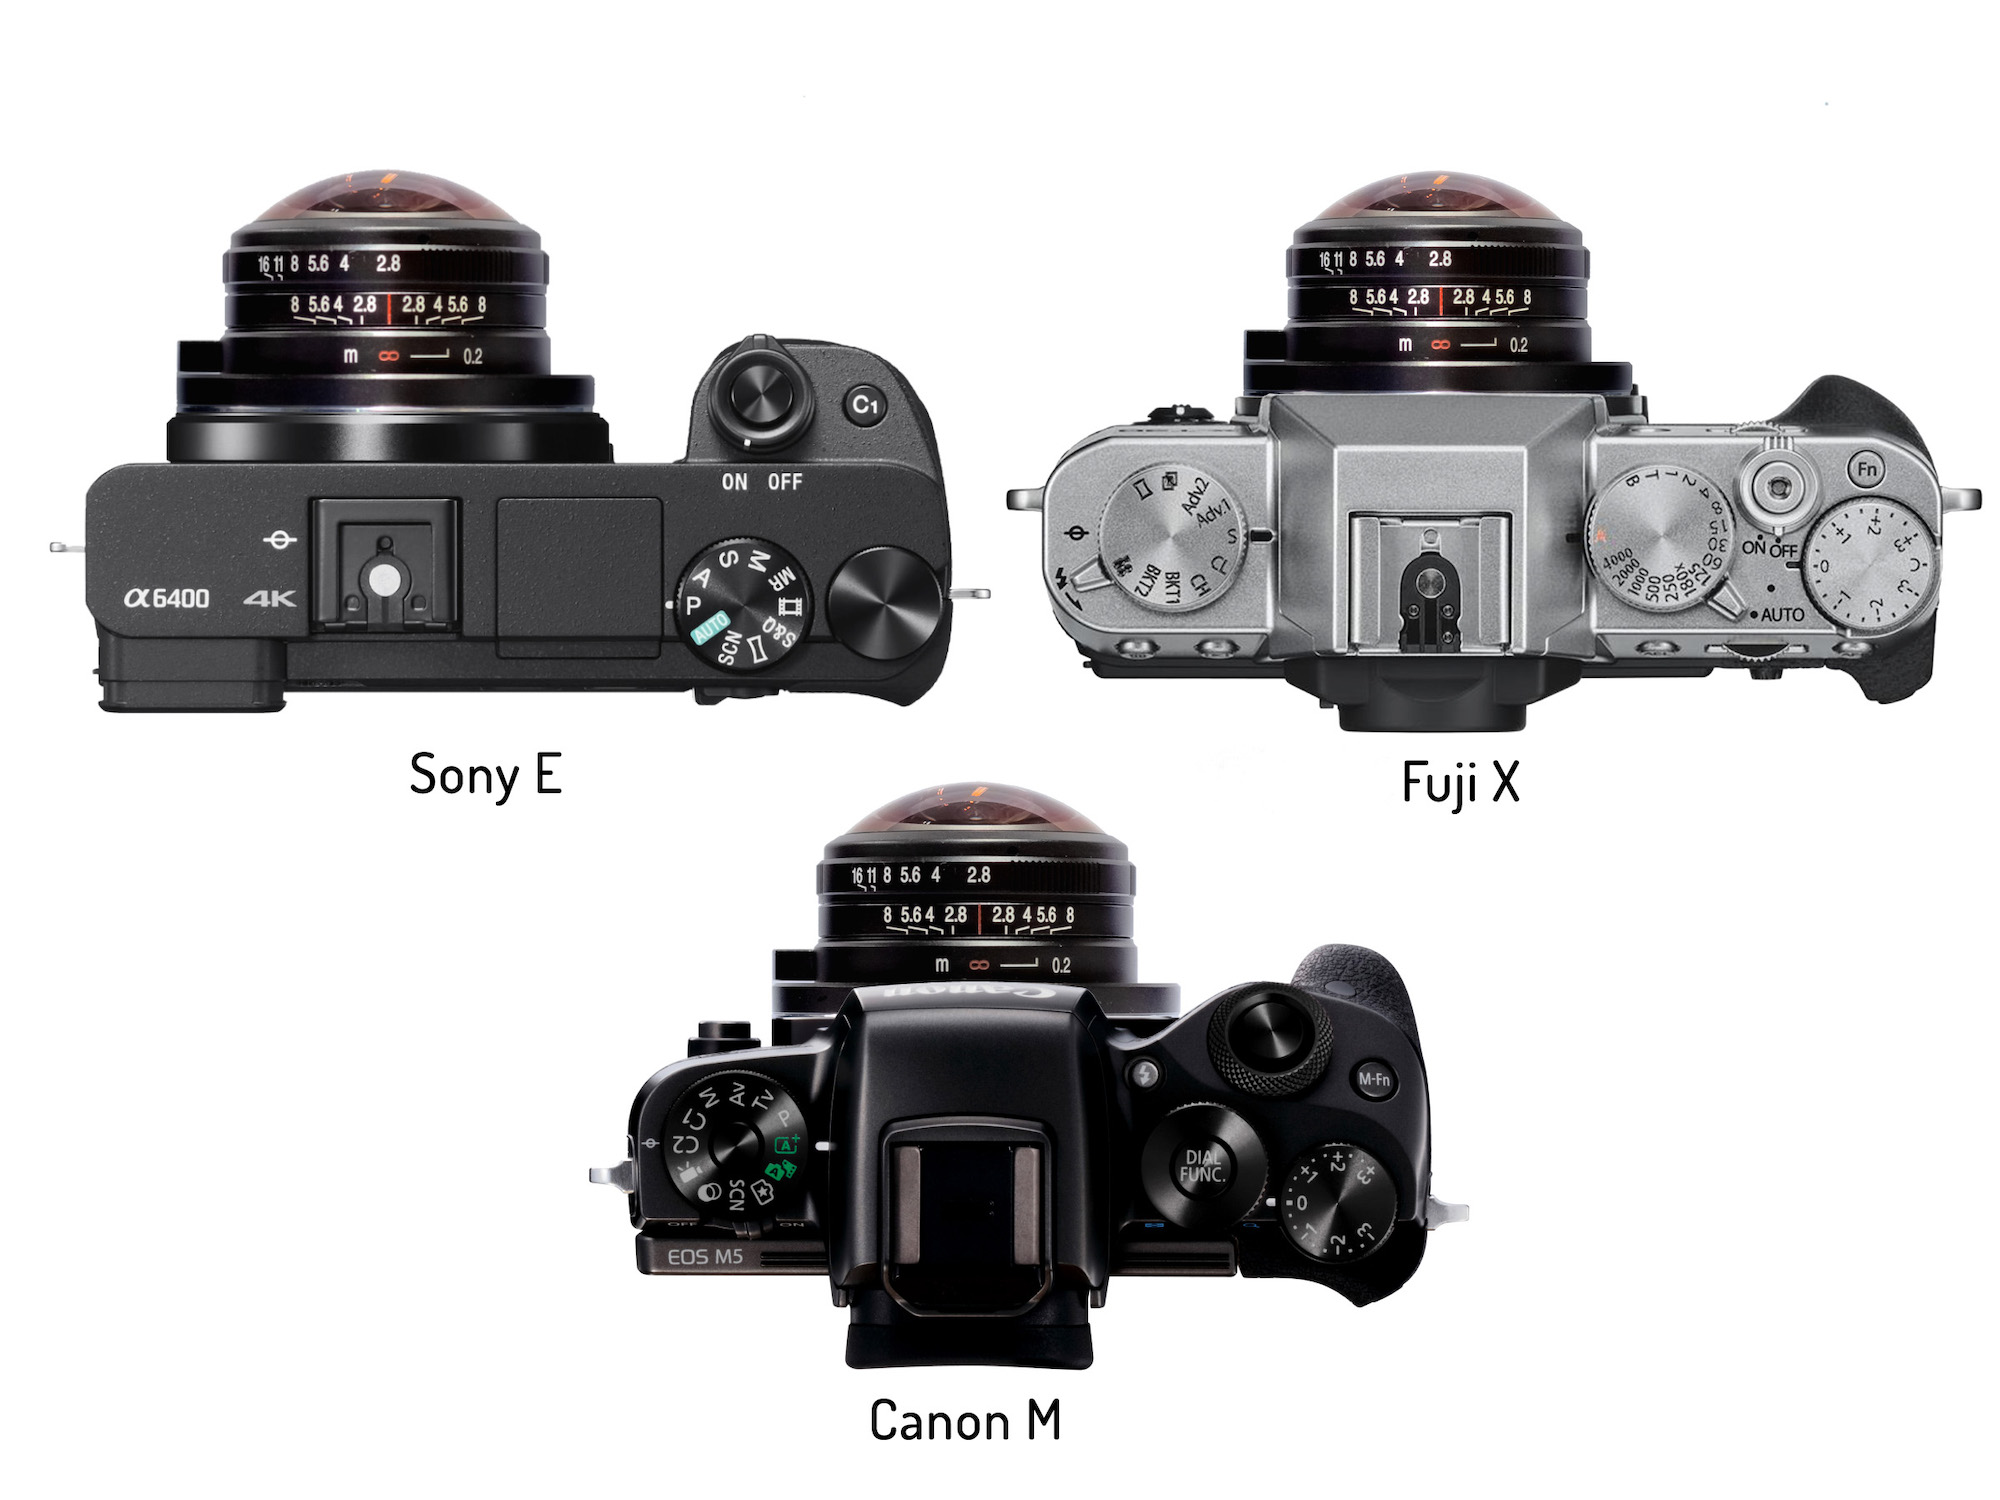 Venus Optics adds Fuji X, Sony E, & Canon M options to the Laowa 4mm f/2.8 Circular Fisheye Lens